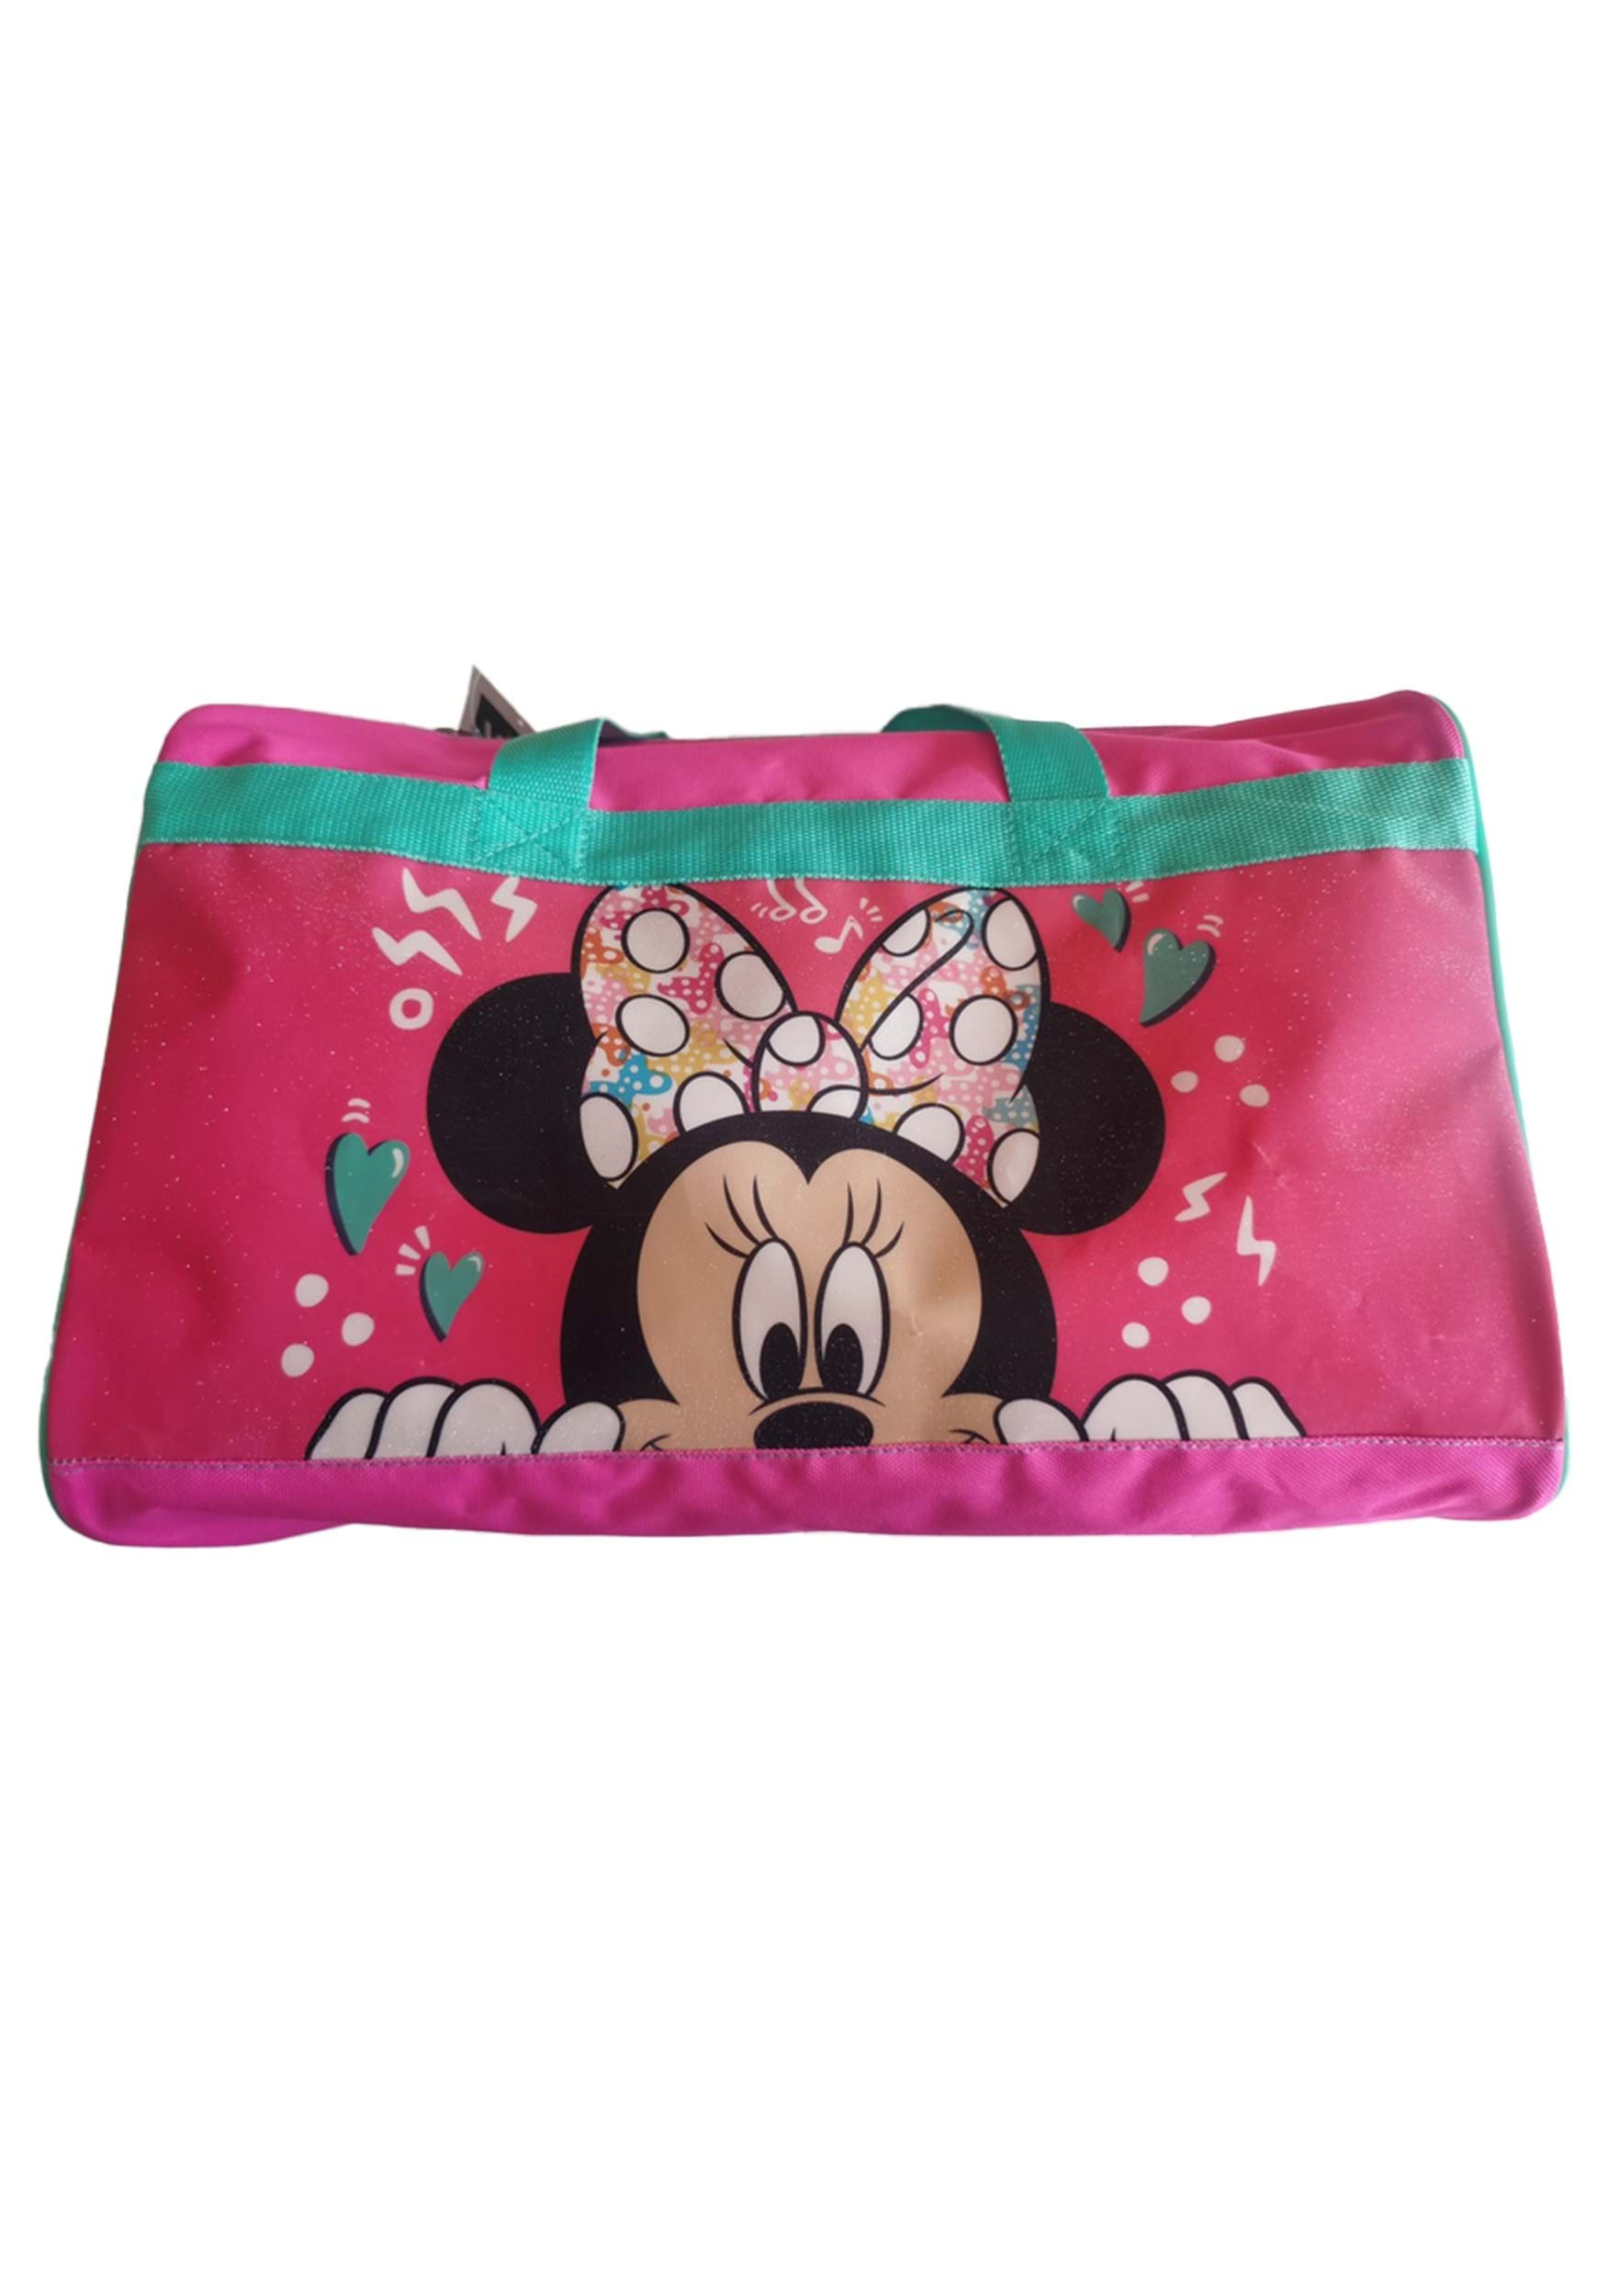 Minnie Mouse Duffel Bag